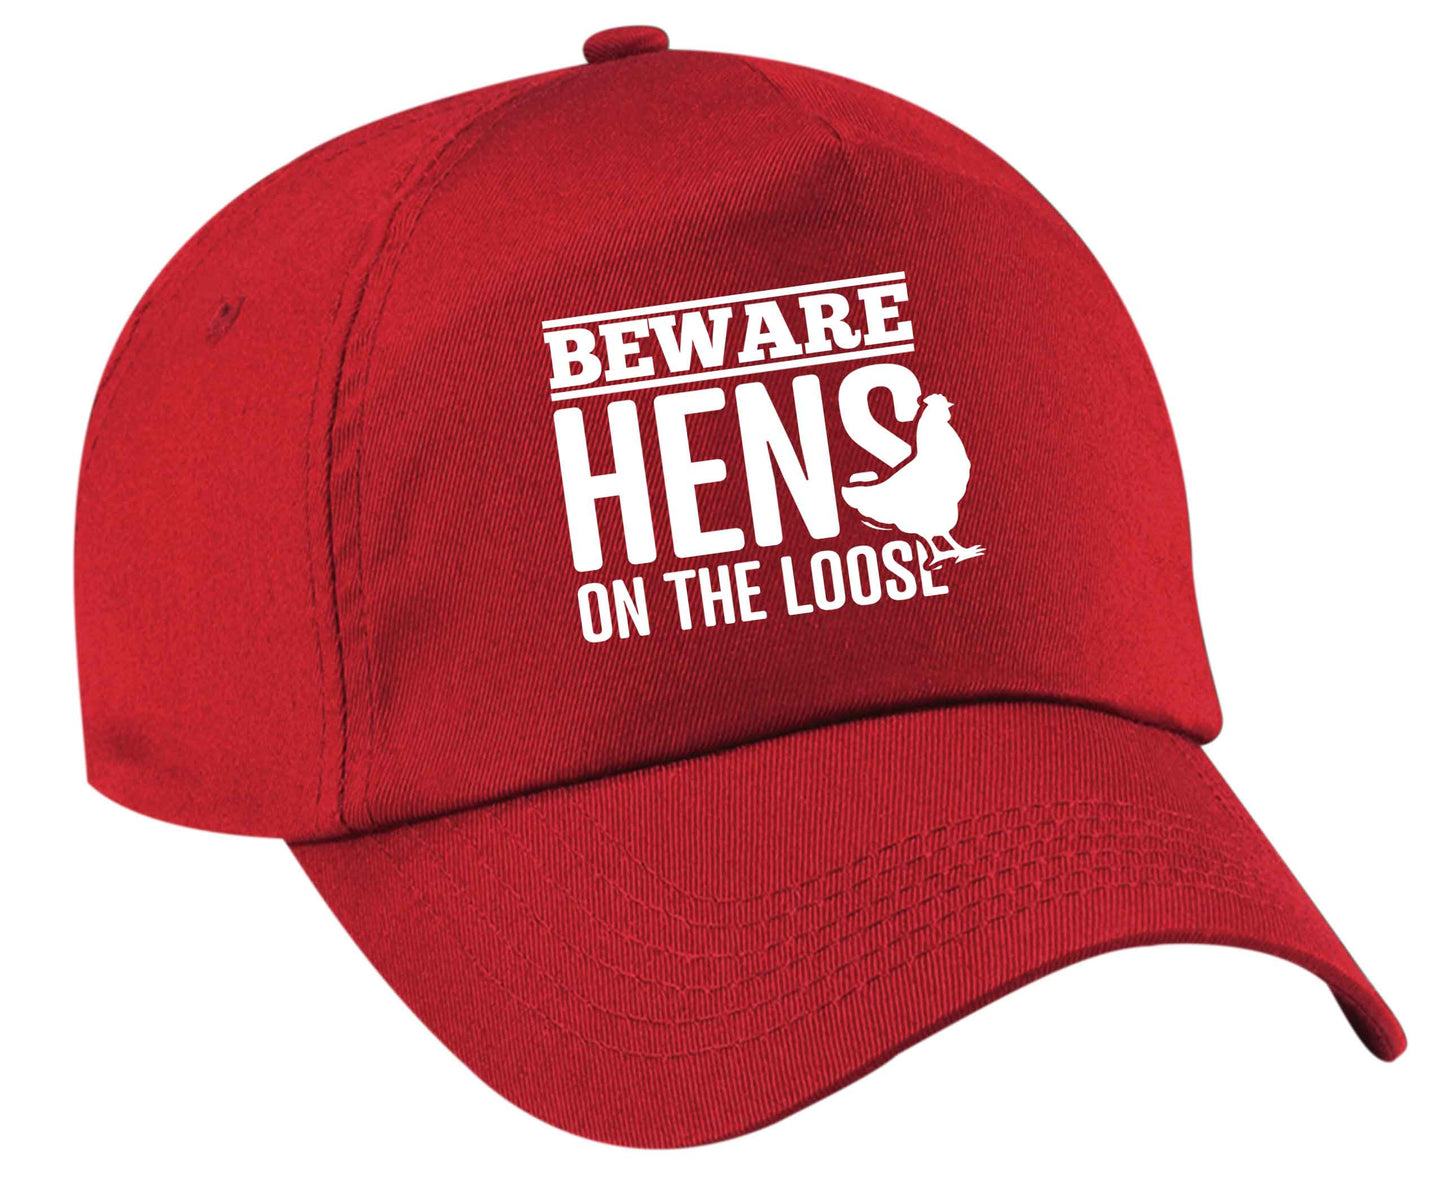 Beware hens on the loose | Baseball Cap